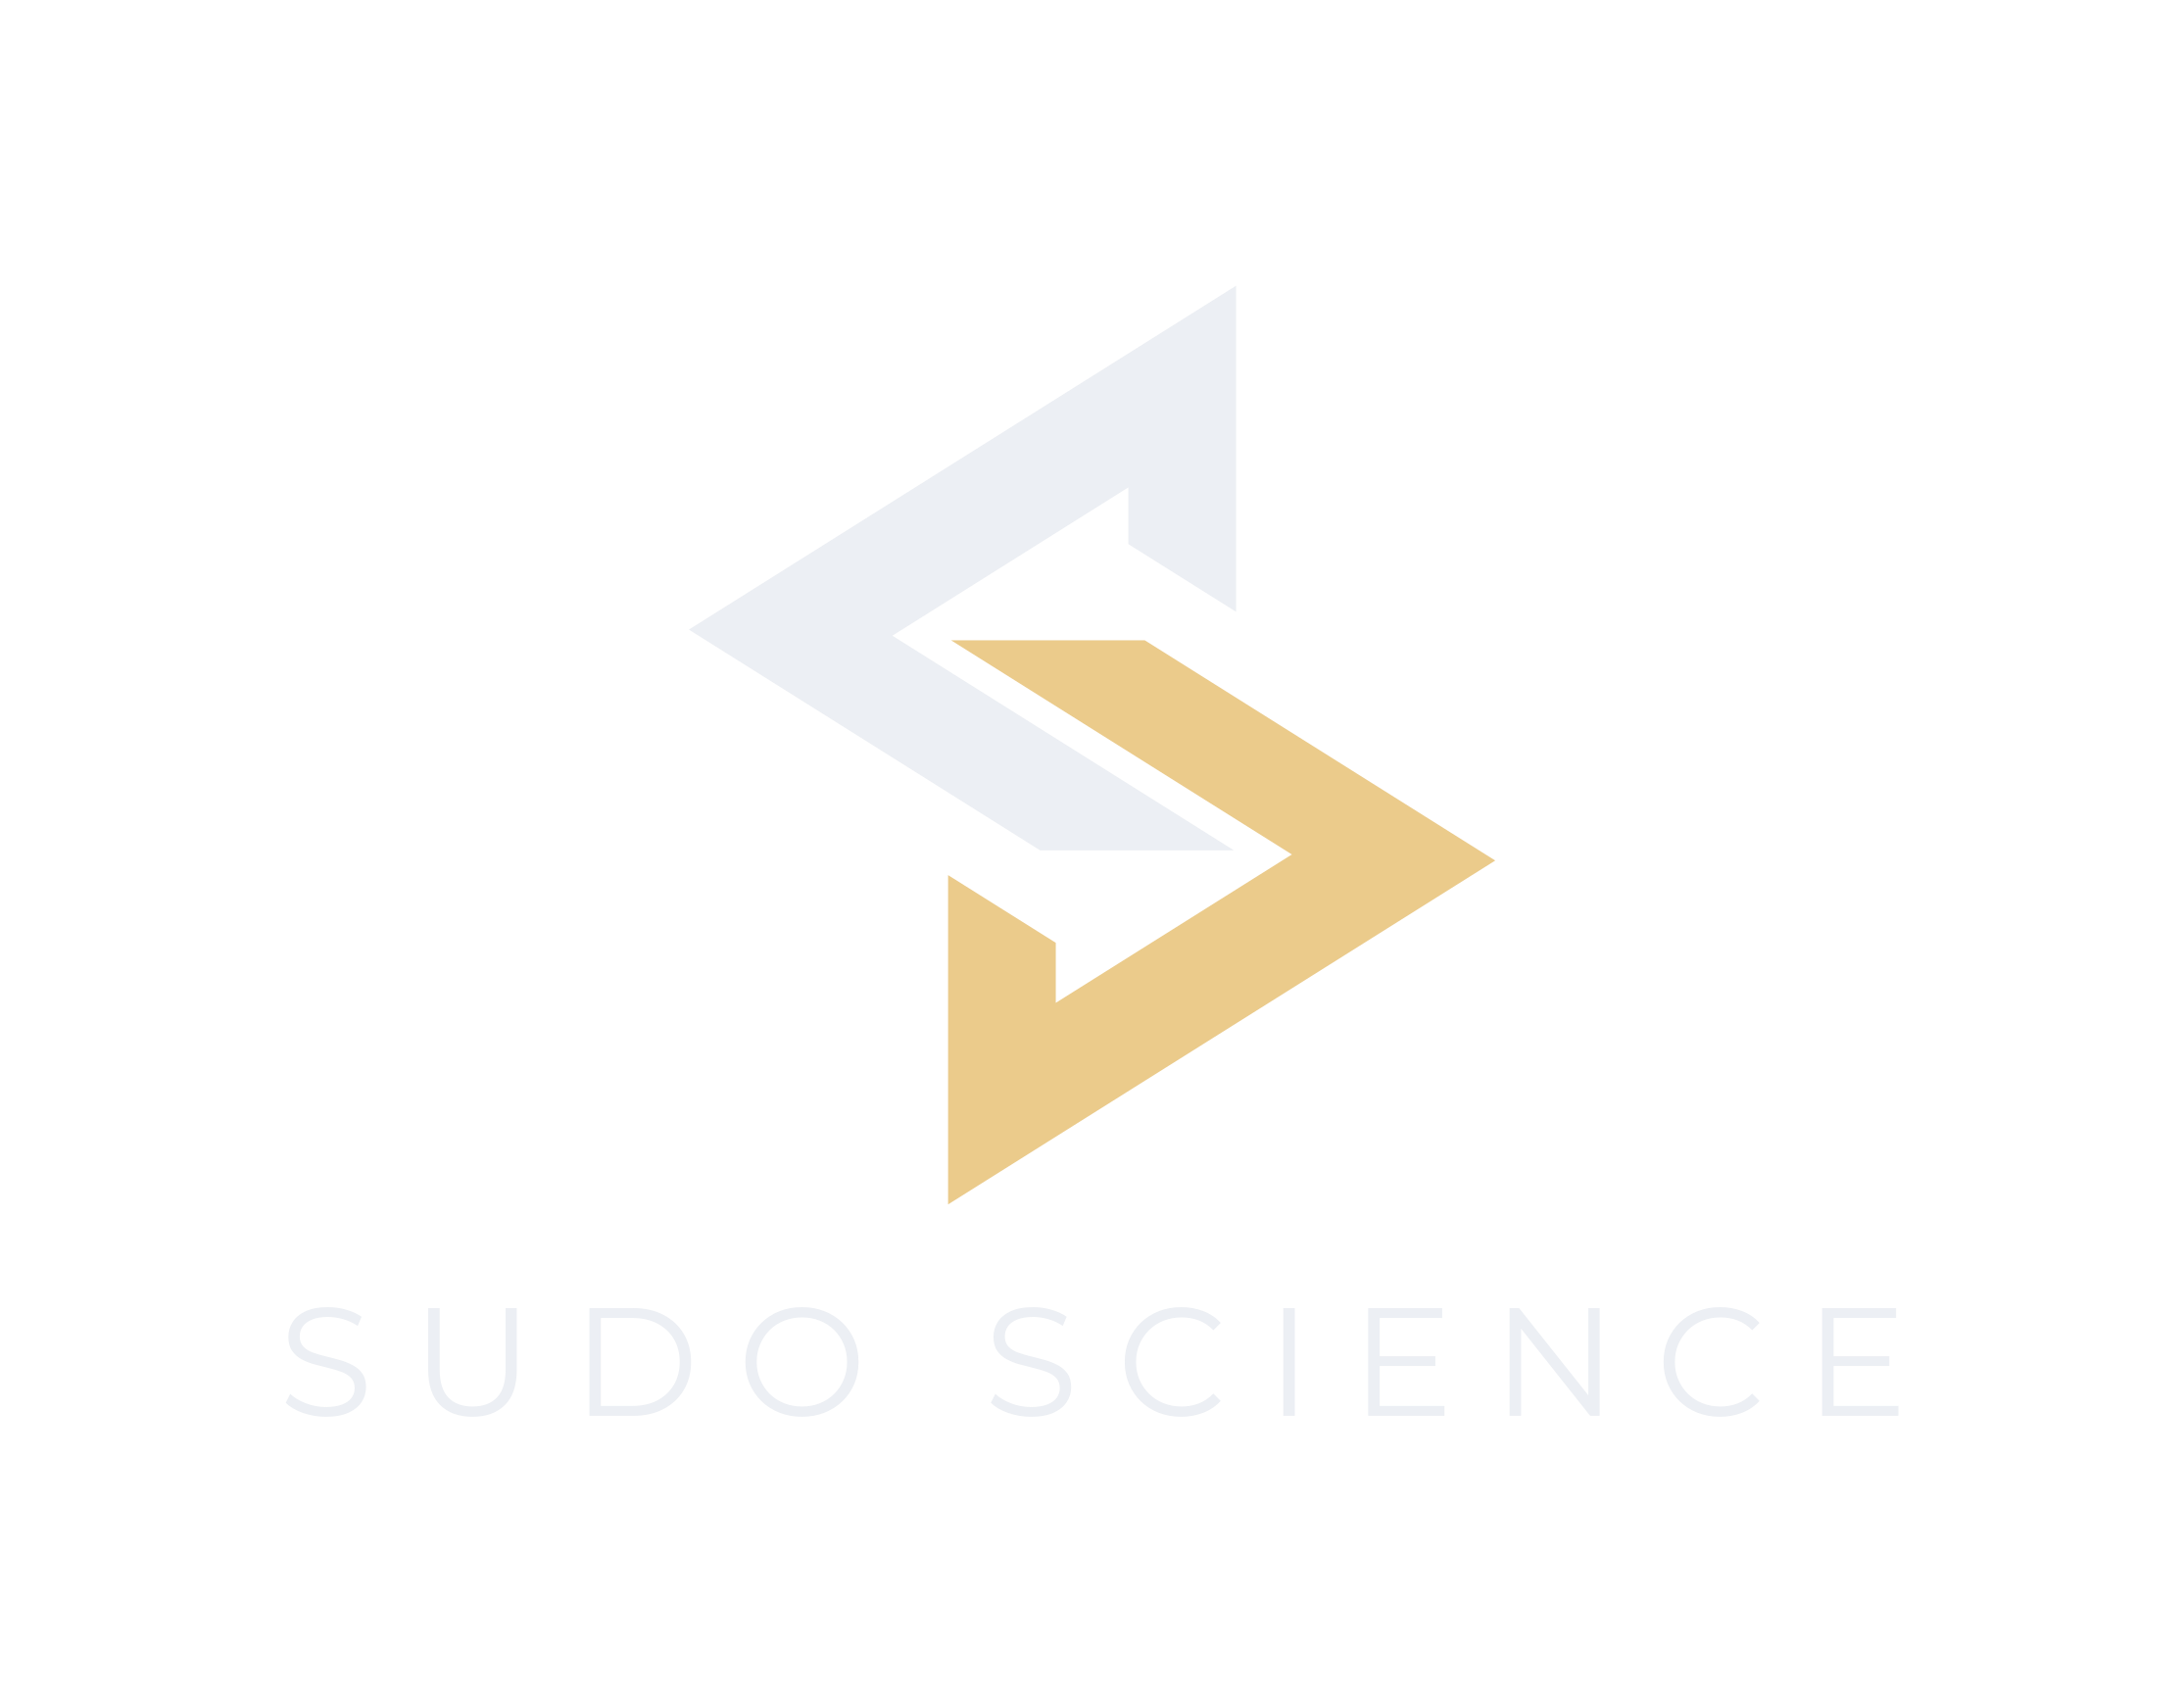 Sudo Science